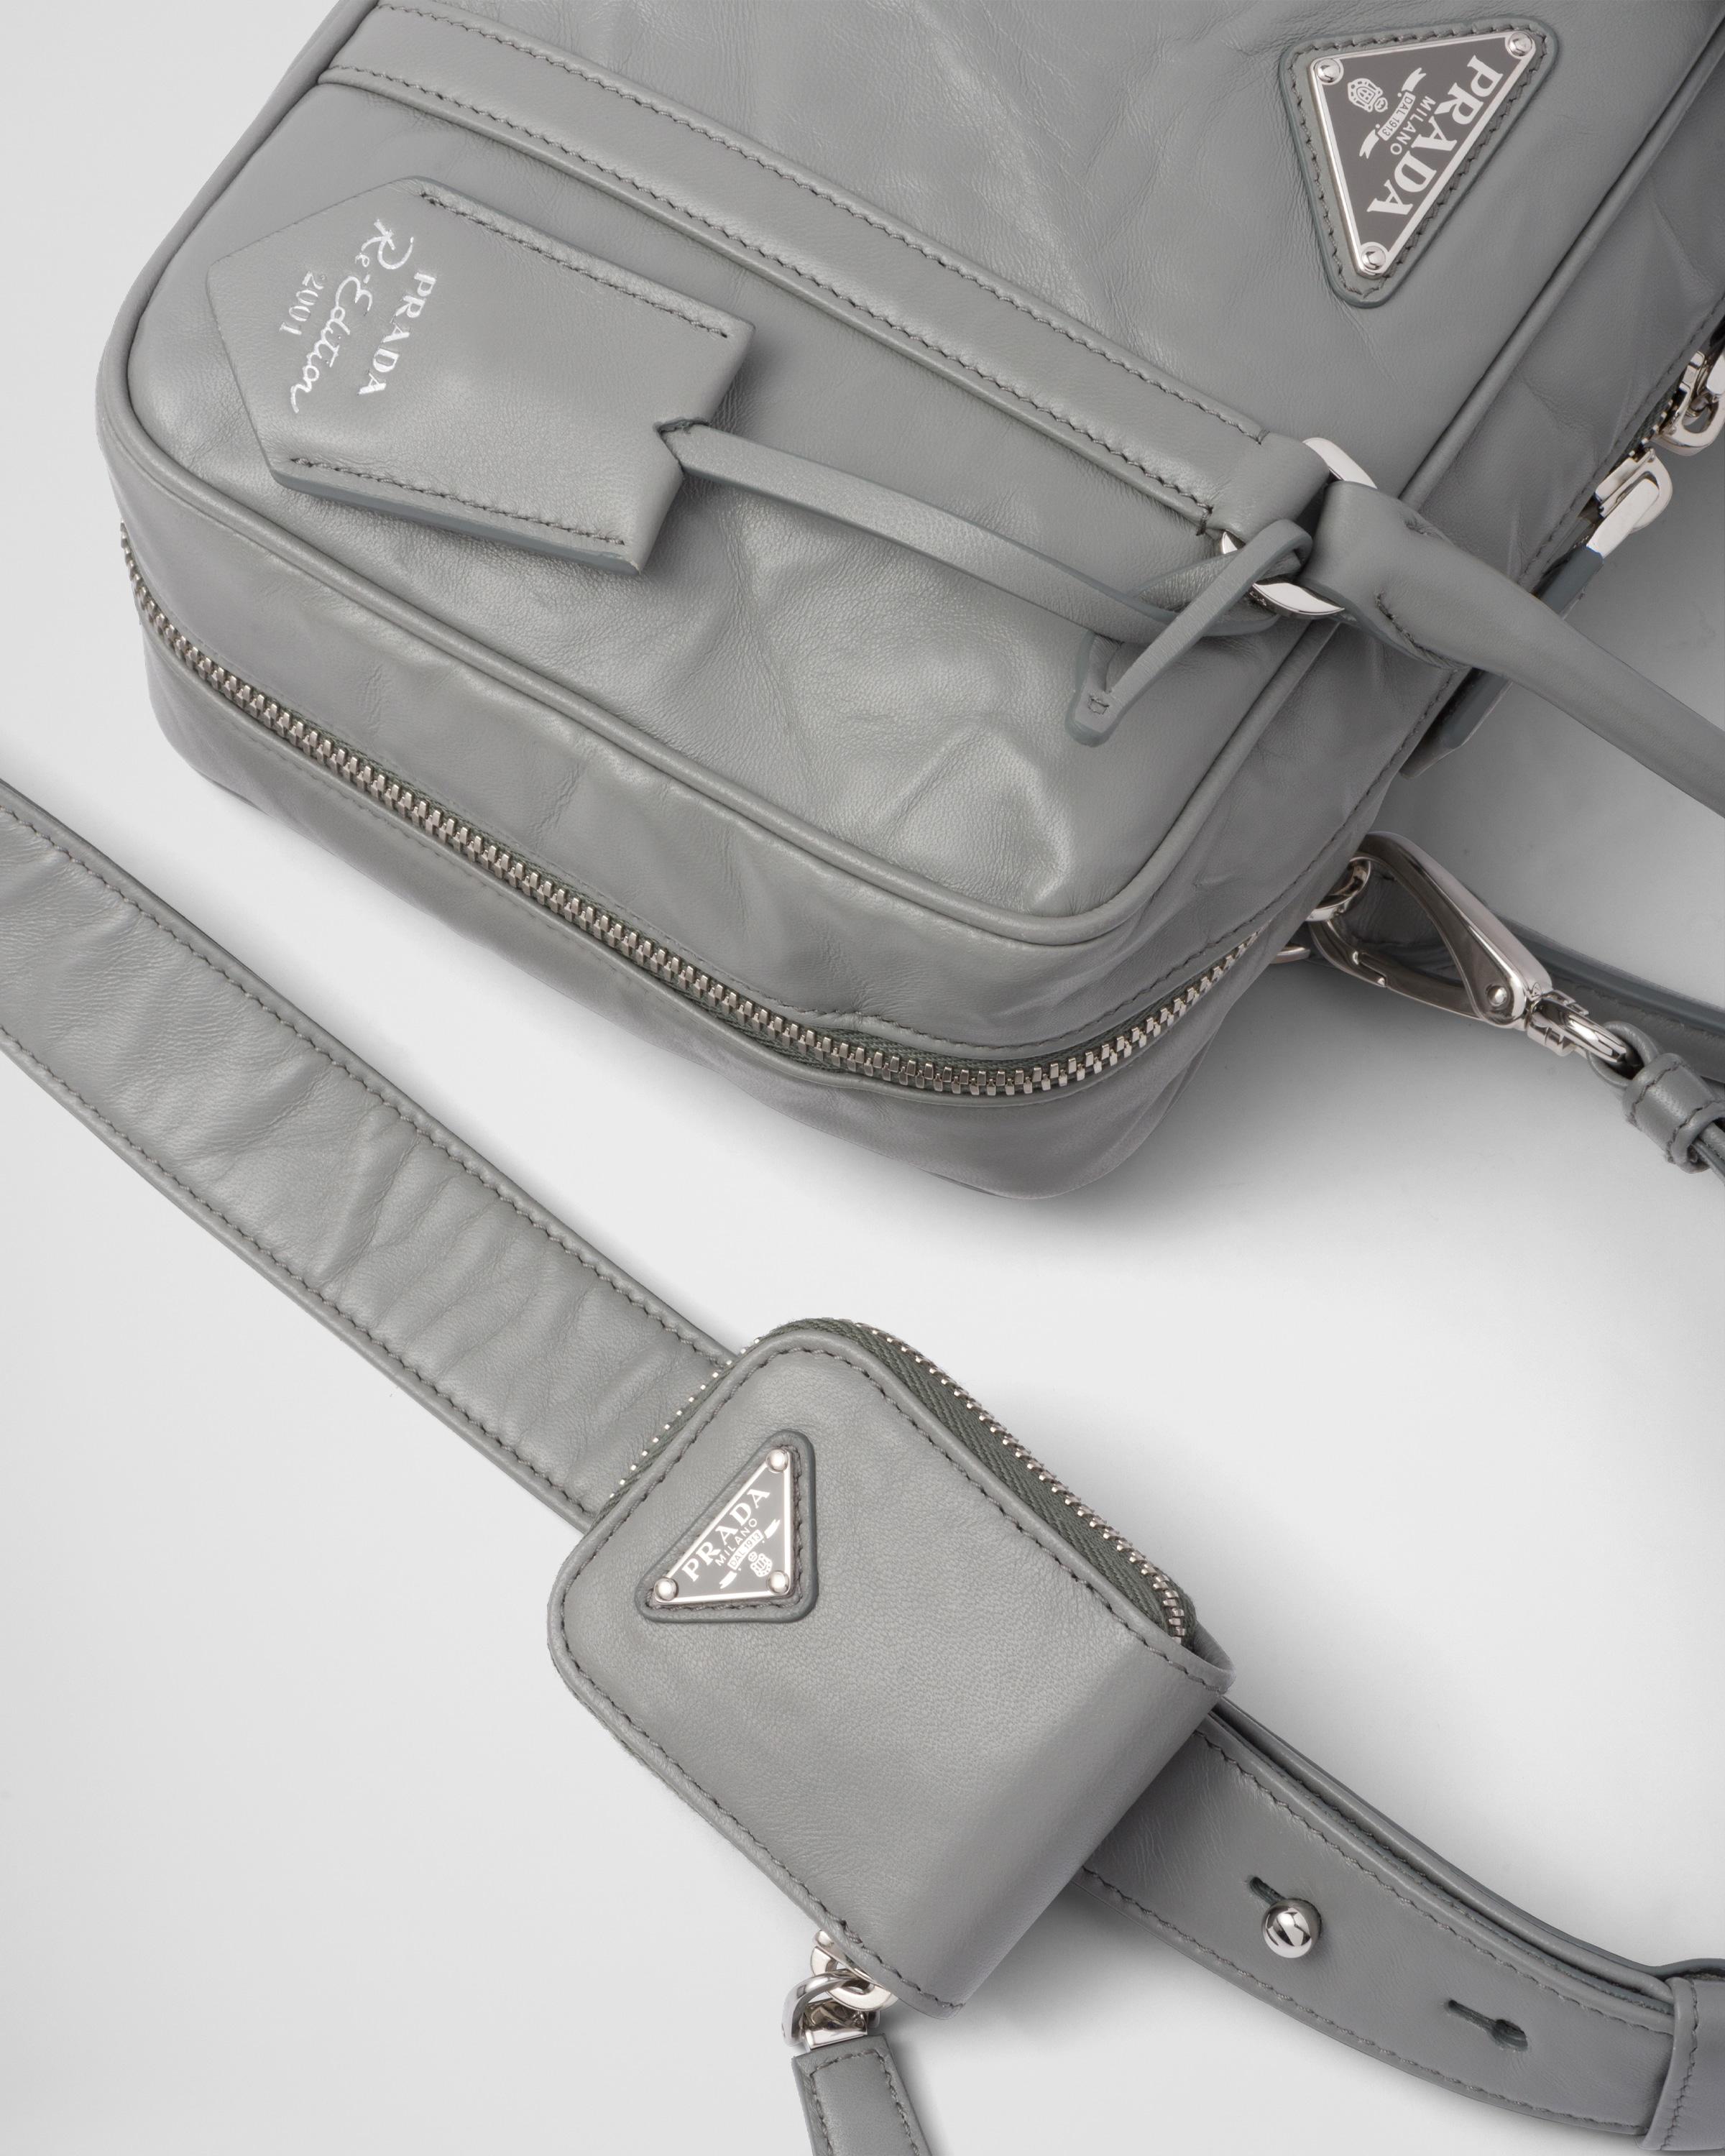 Prada Medium Antique Nappa Leather Top Handle Bag in Gray